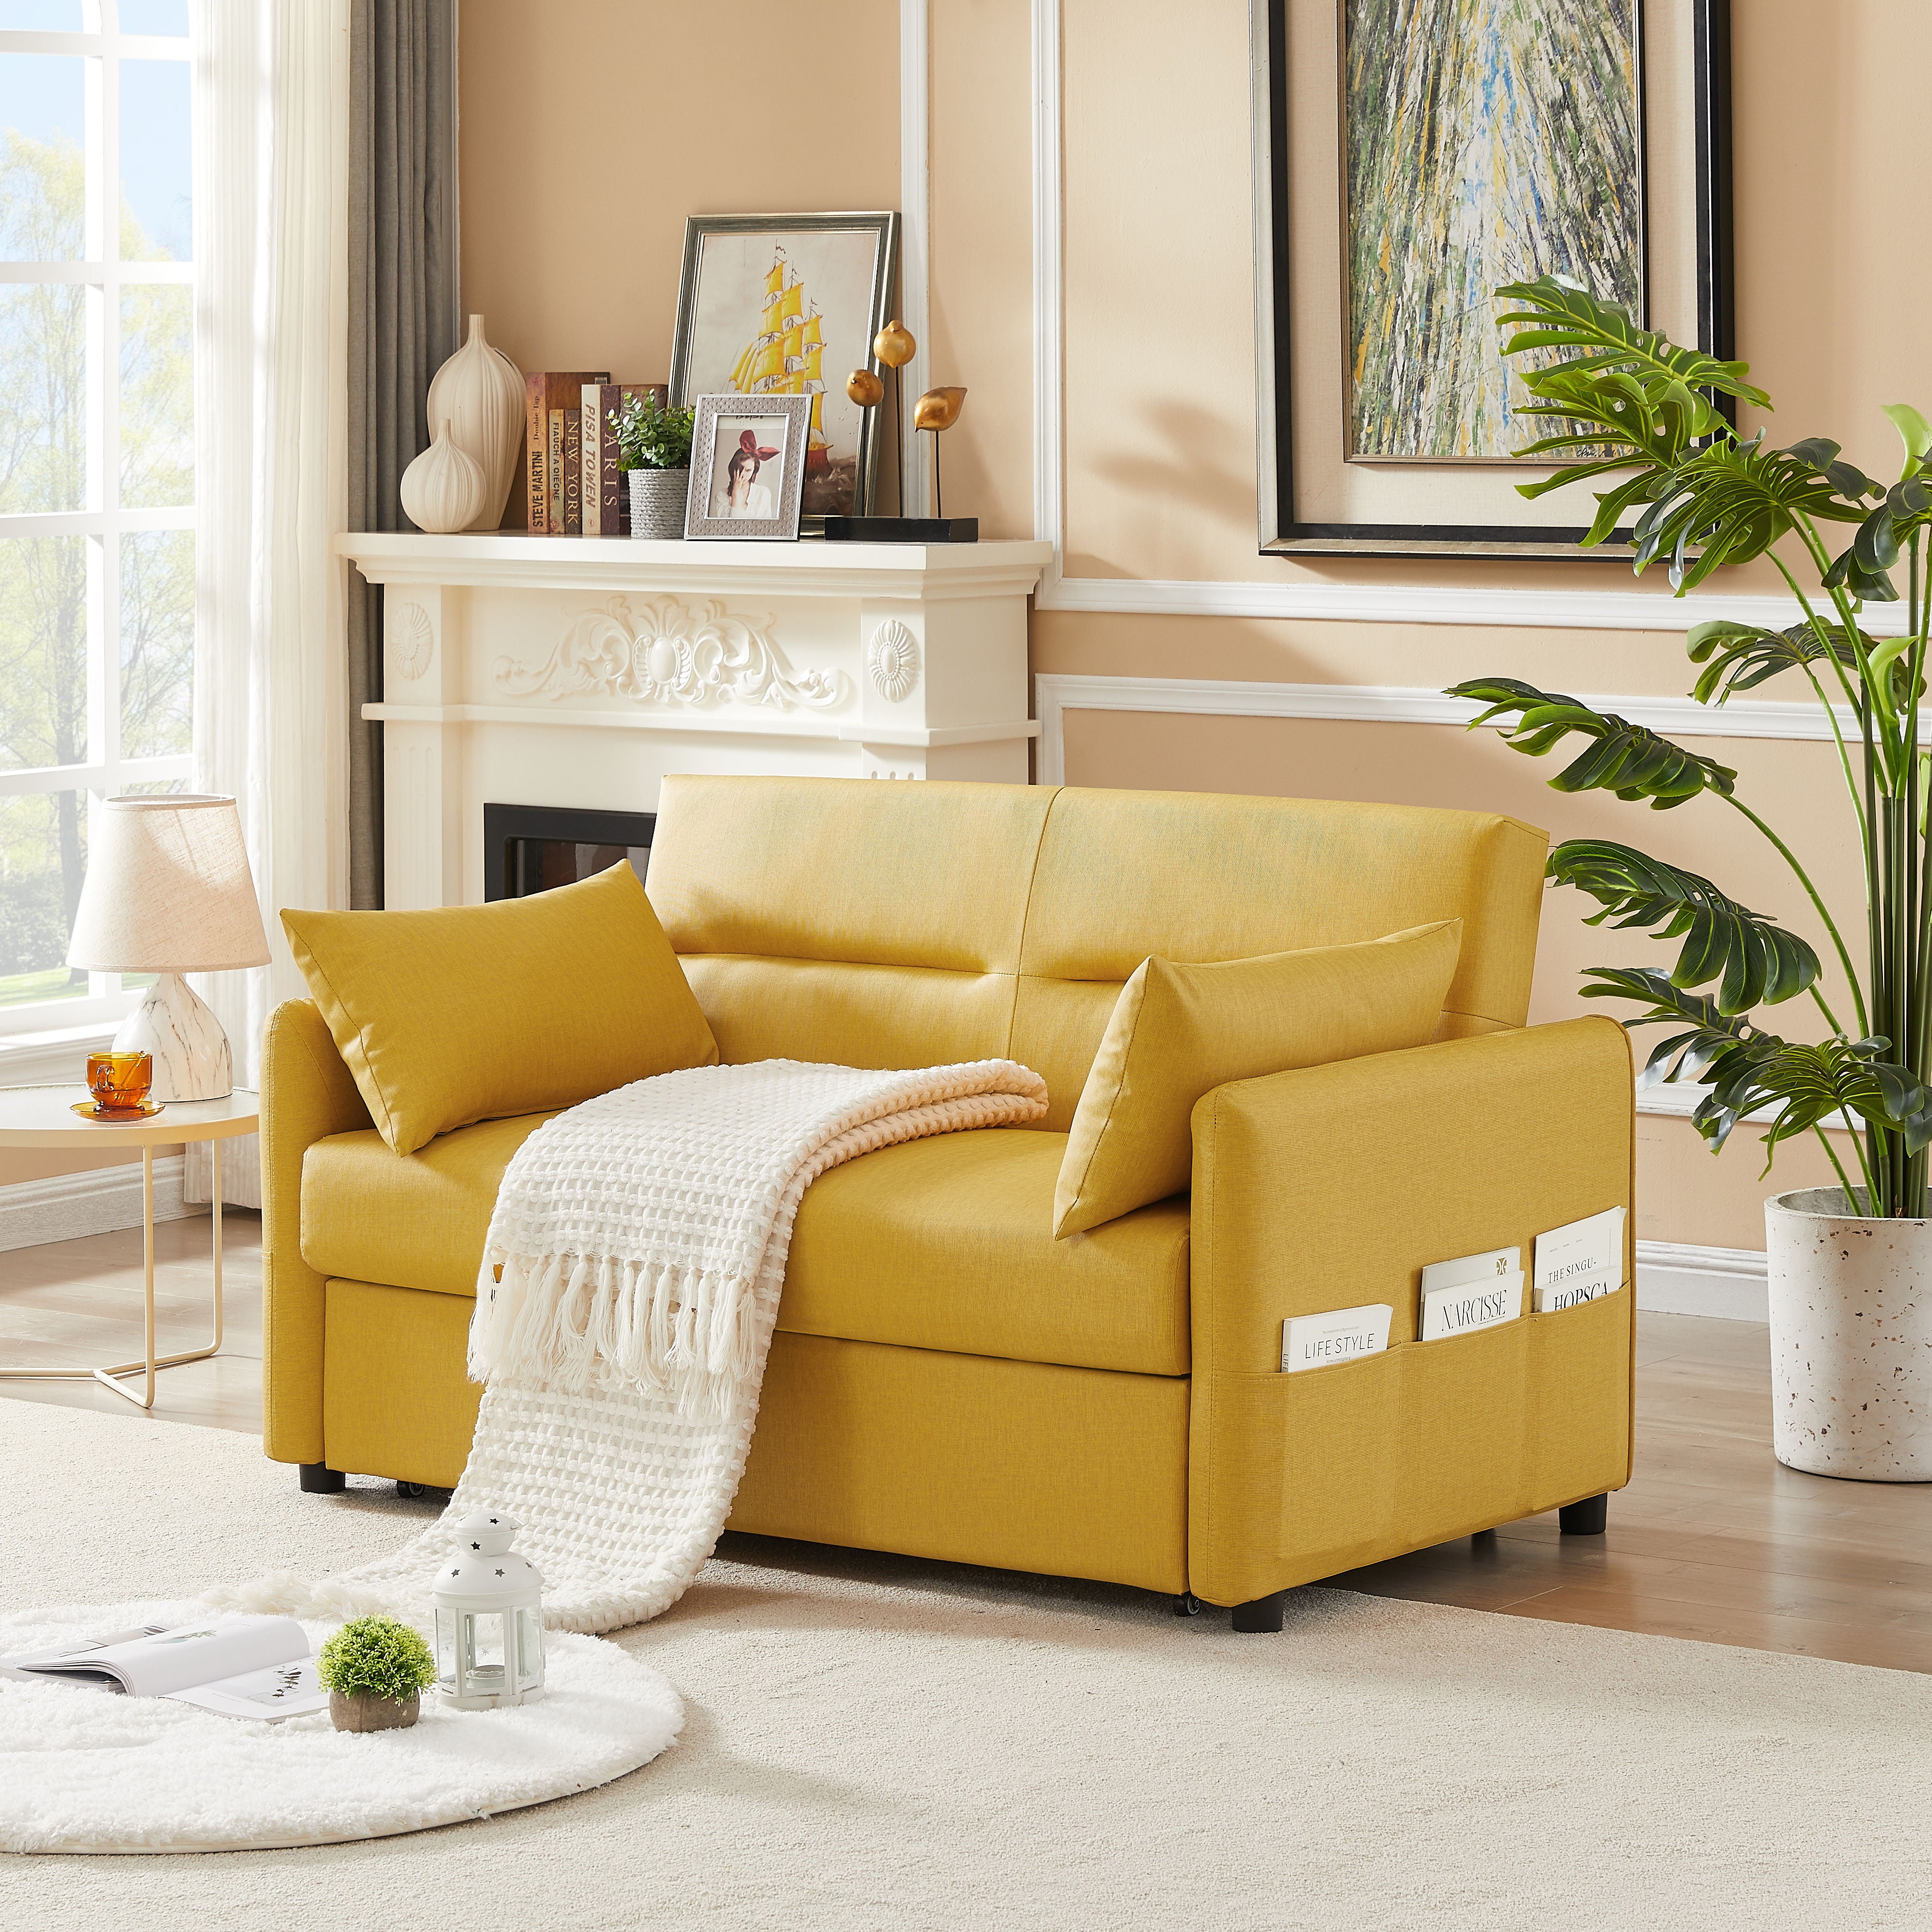 2033 Yellow Cloth Grain Leather (PU) Leisure Two-Seat Sofa